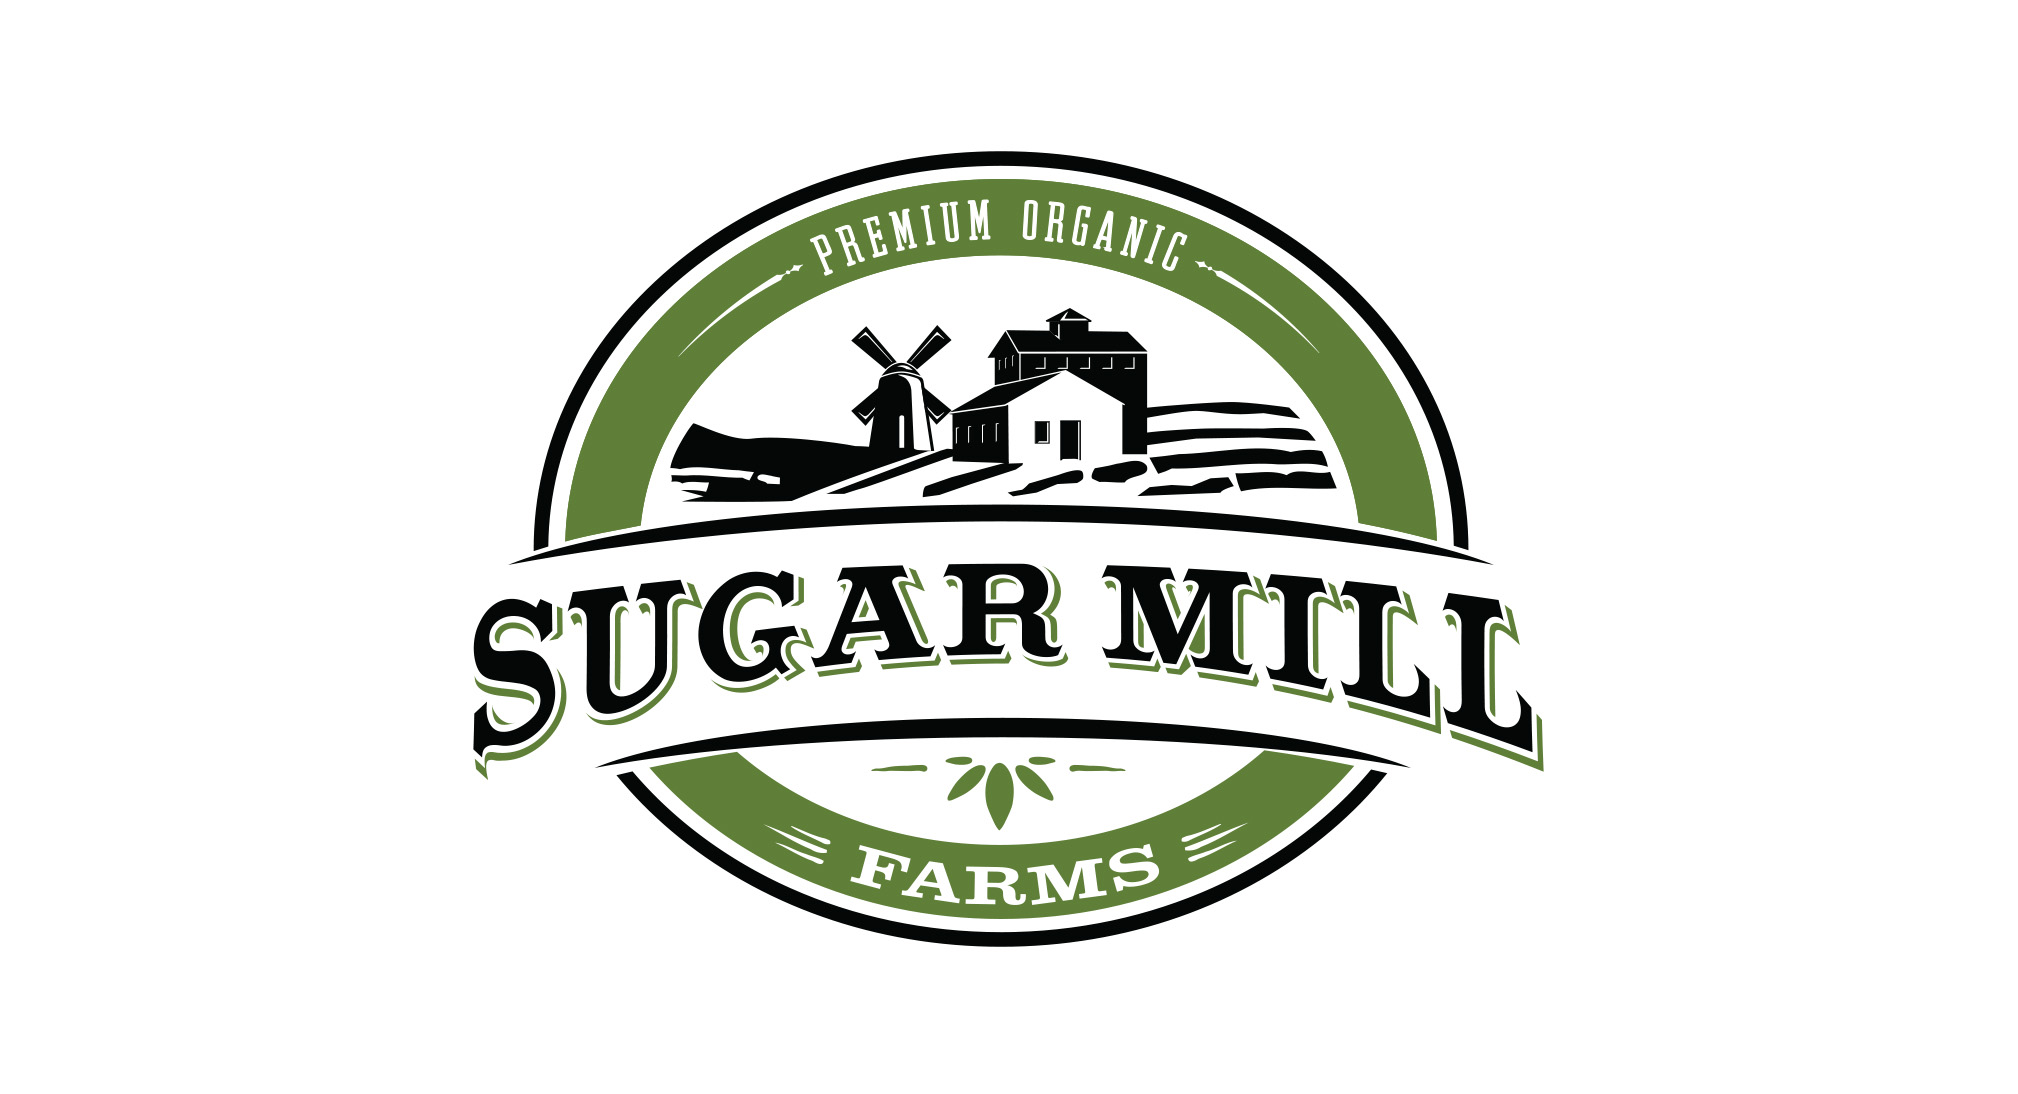 Sugar Mill Farms logo design